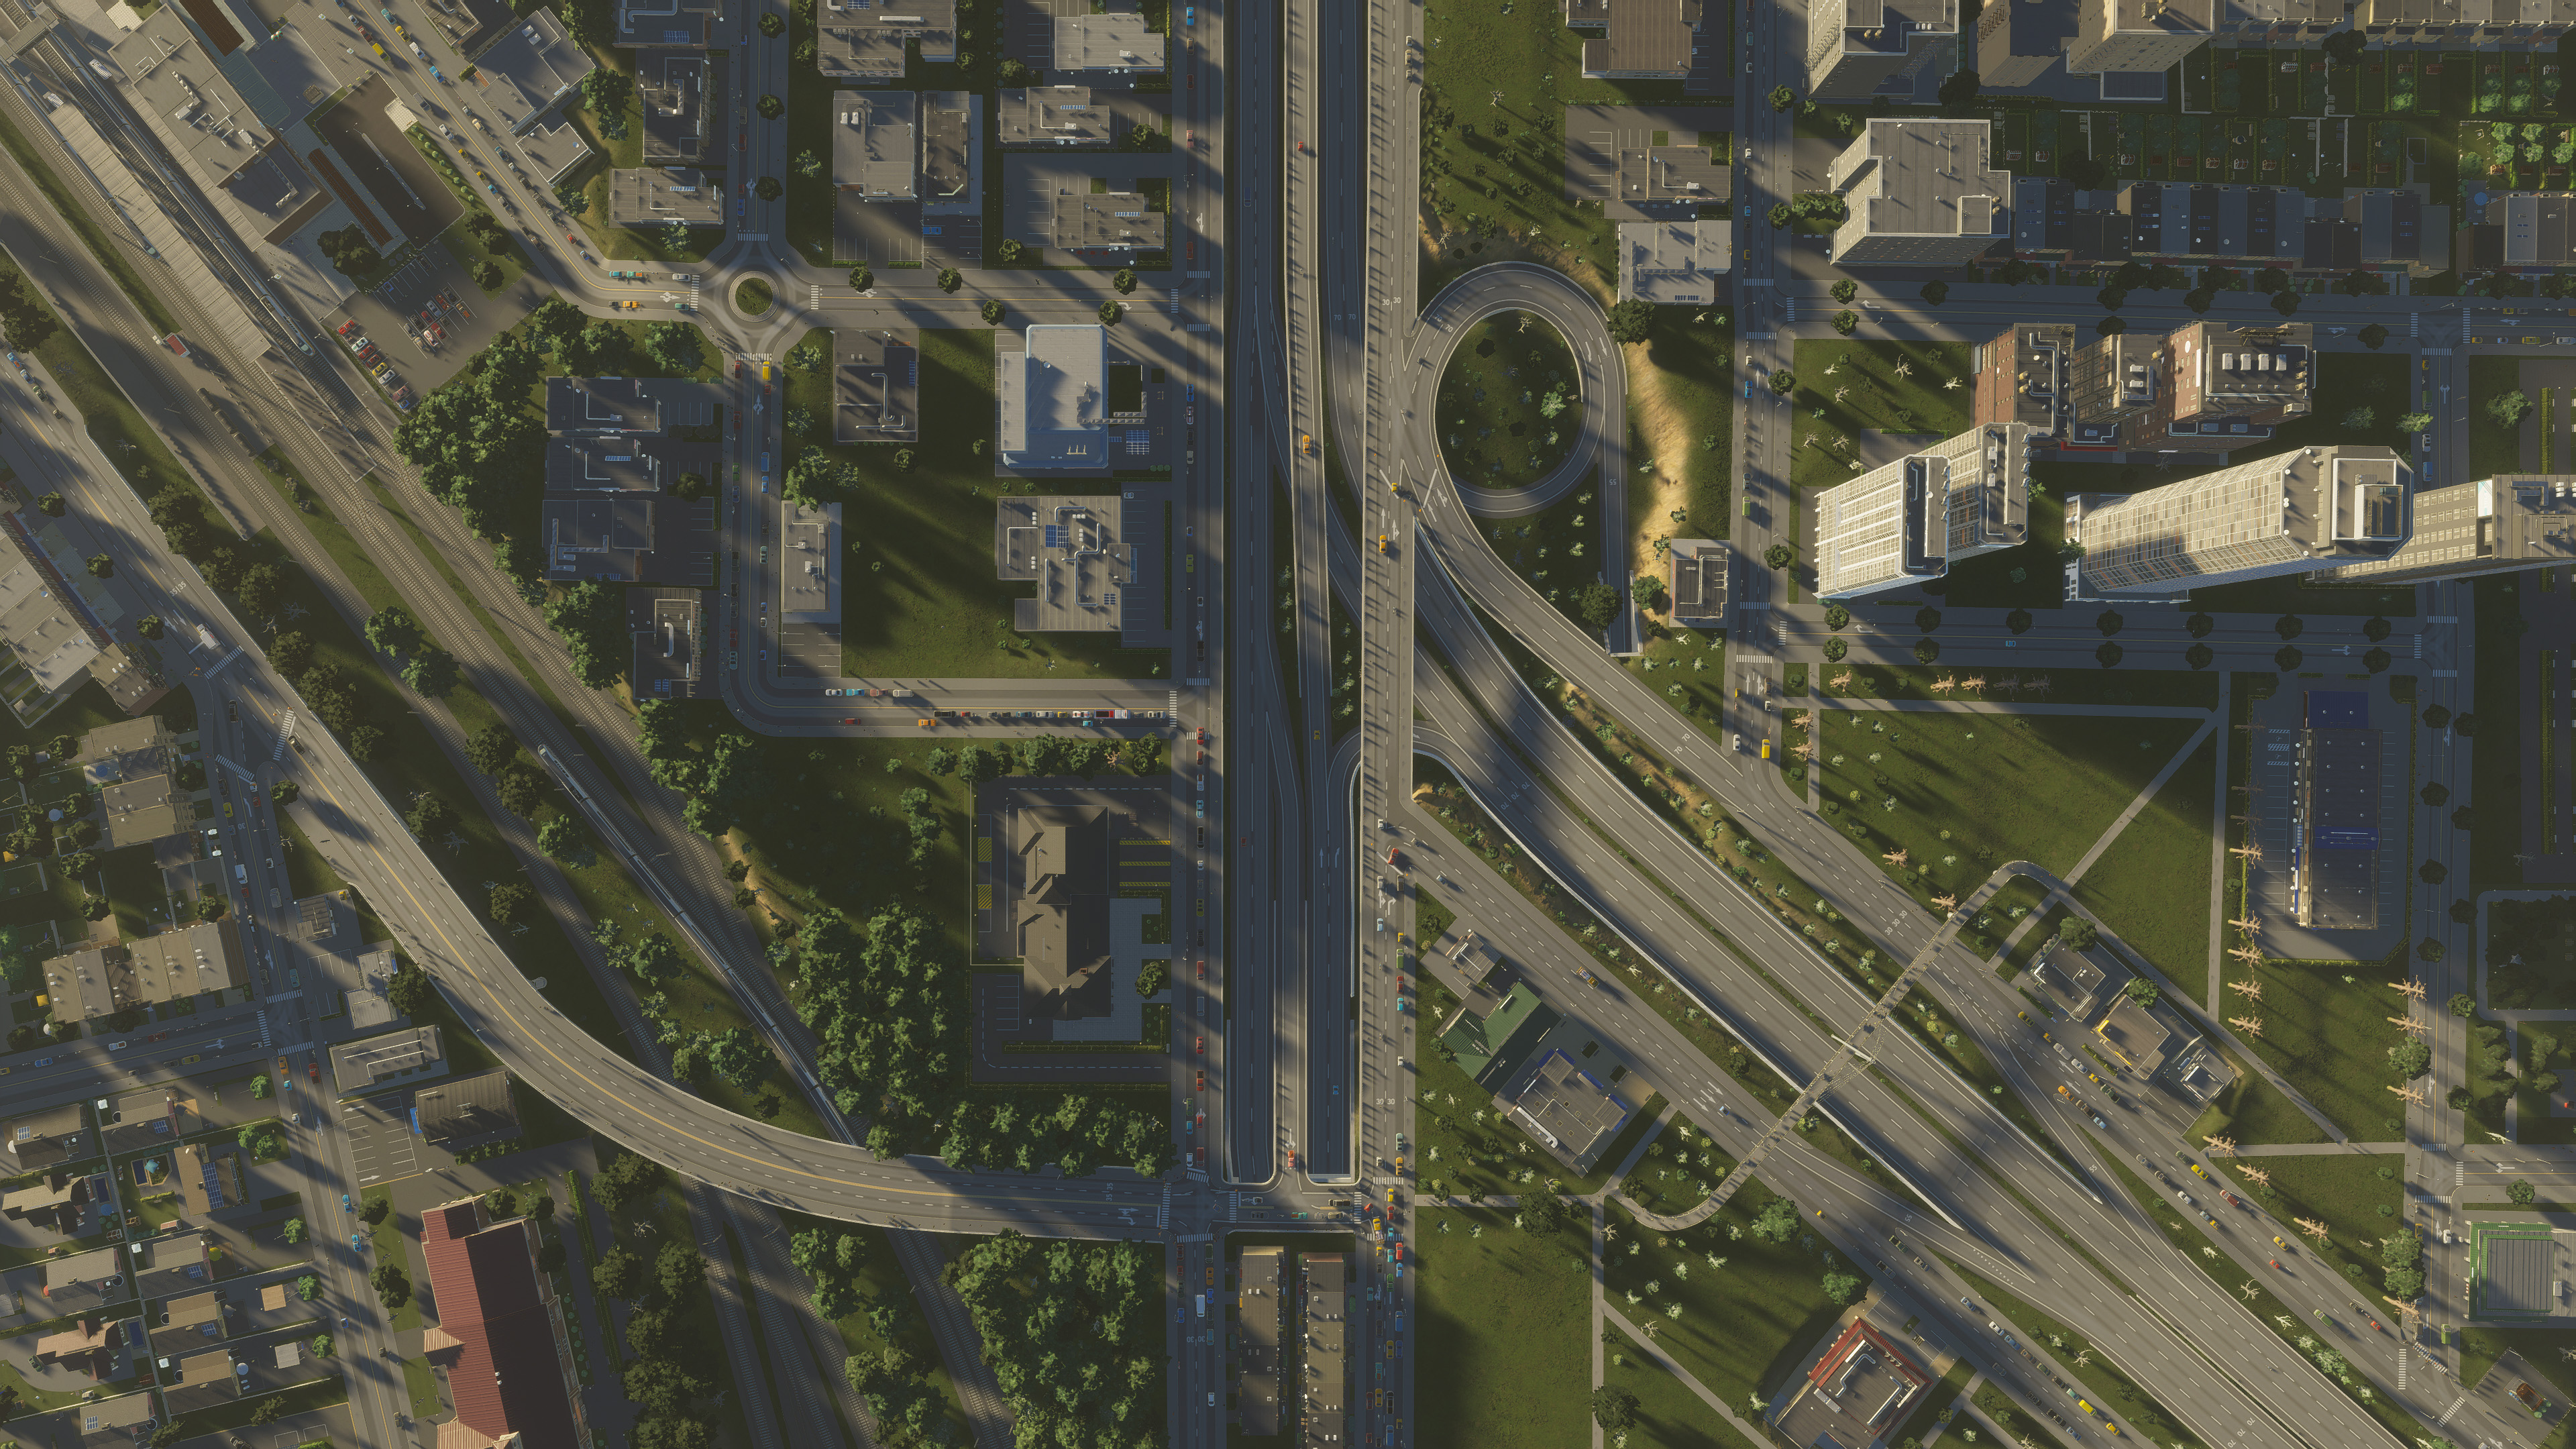 Cities: Skylines II, PC Steam Game